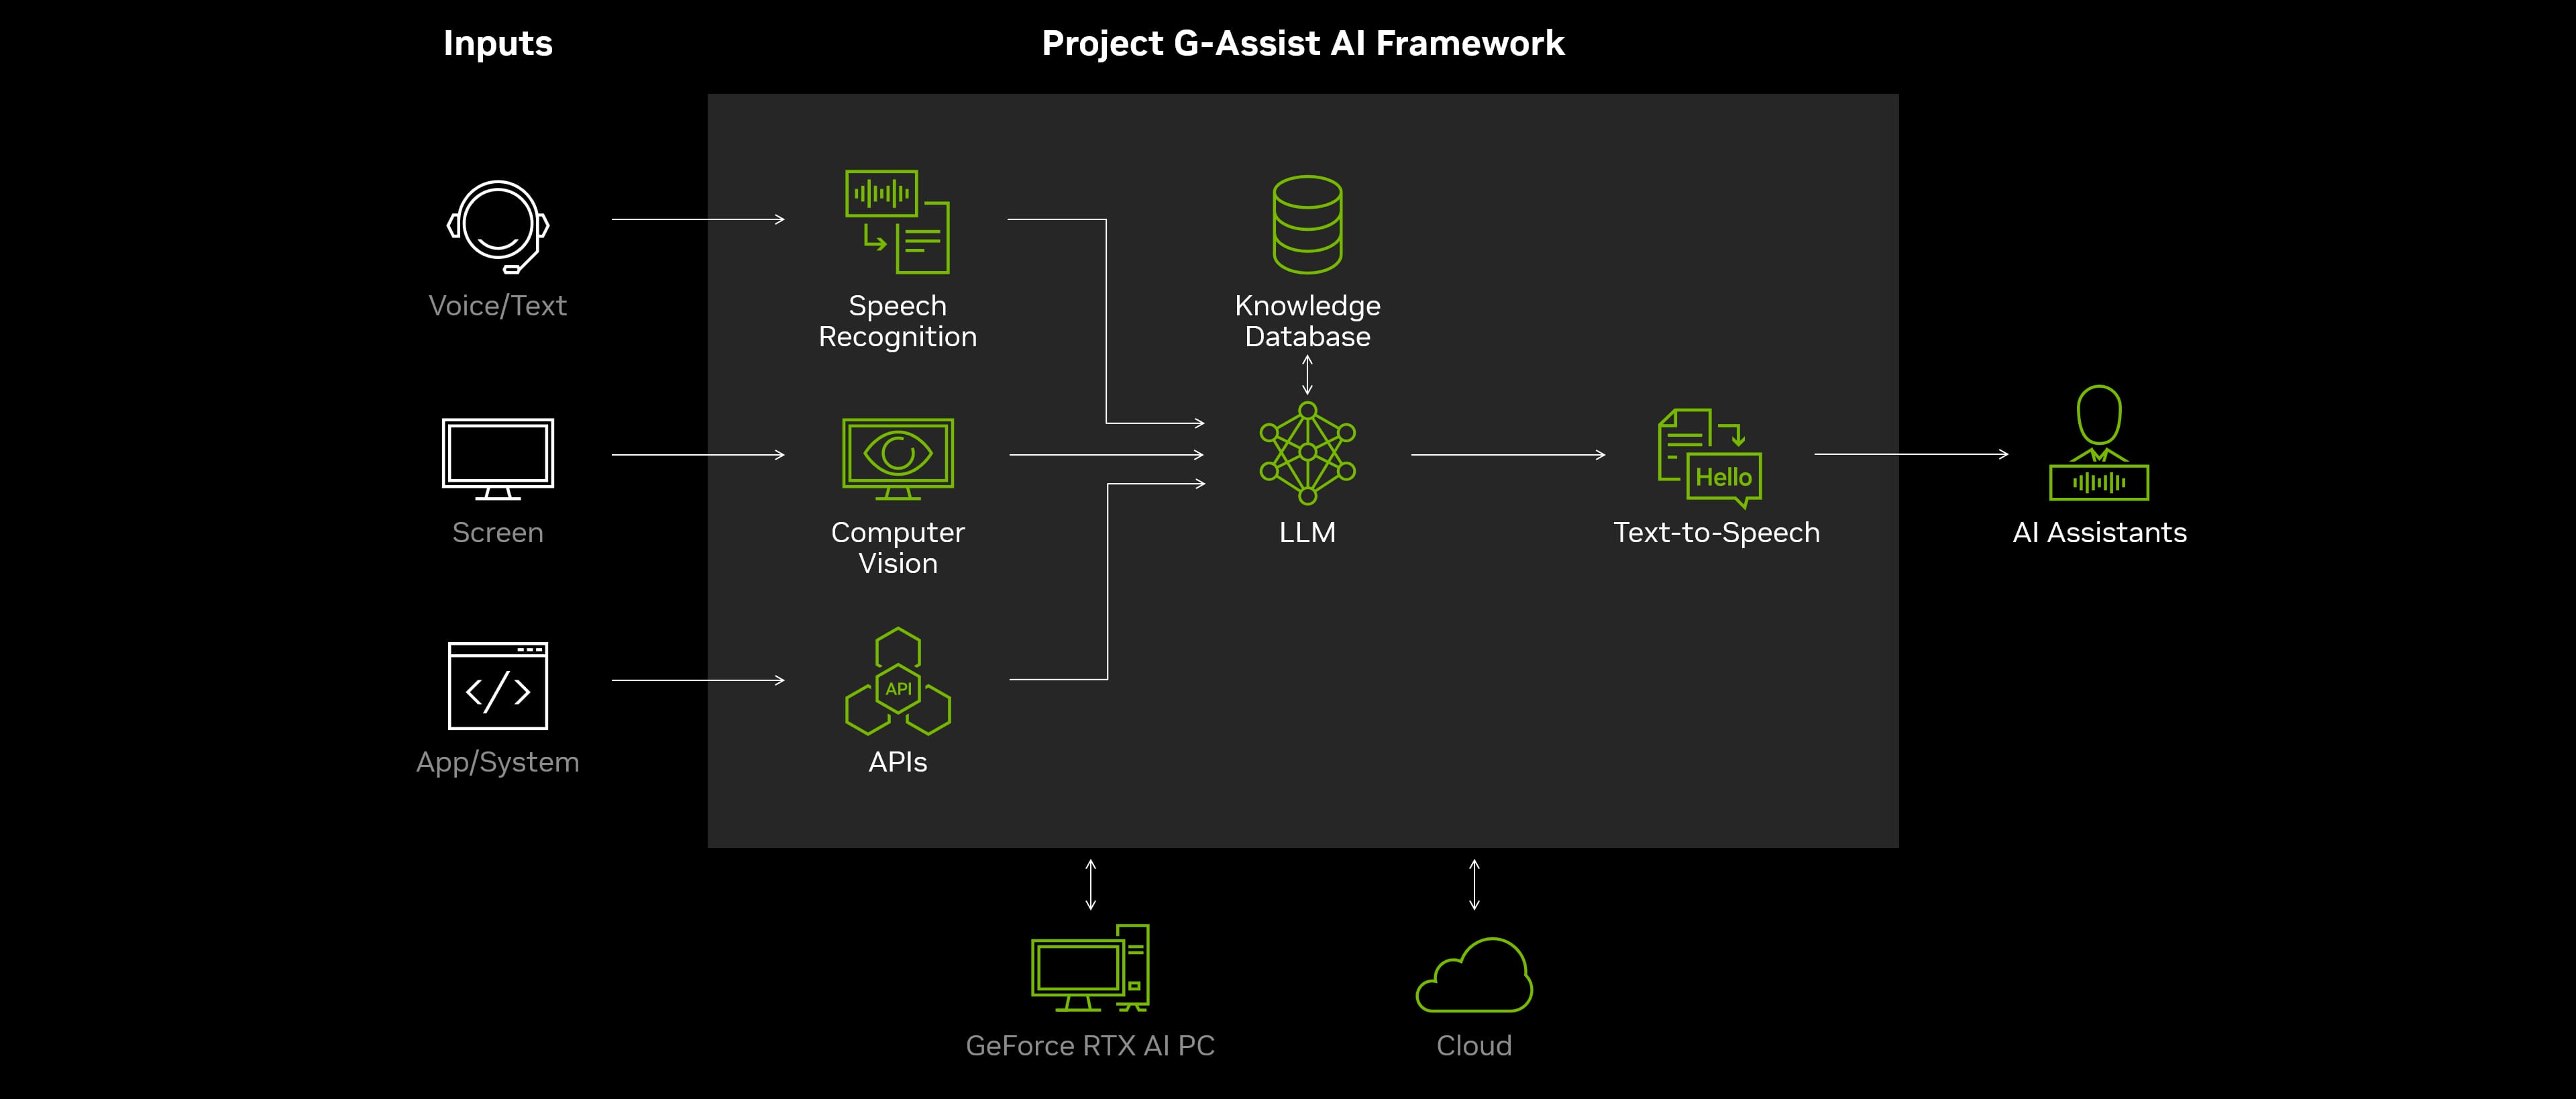 project-g-assist-ai-framework.jpg